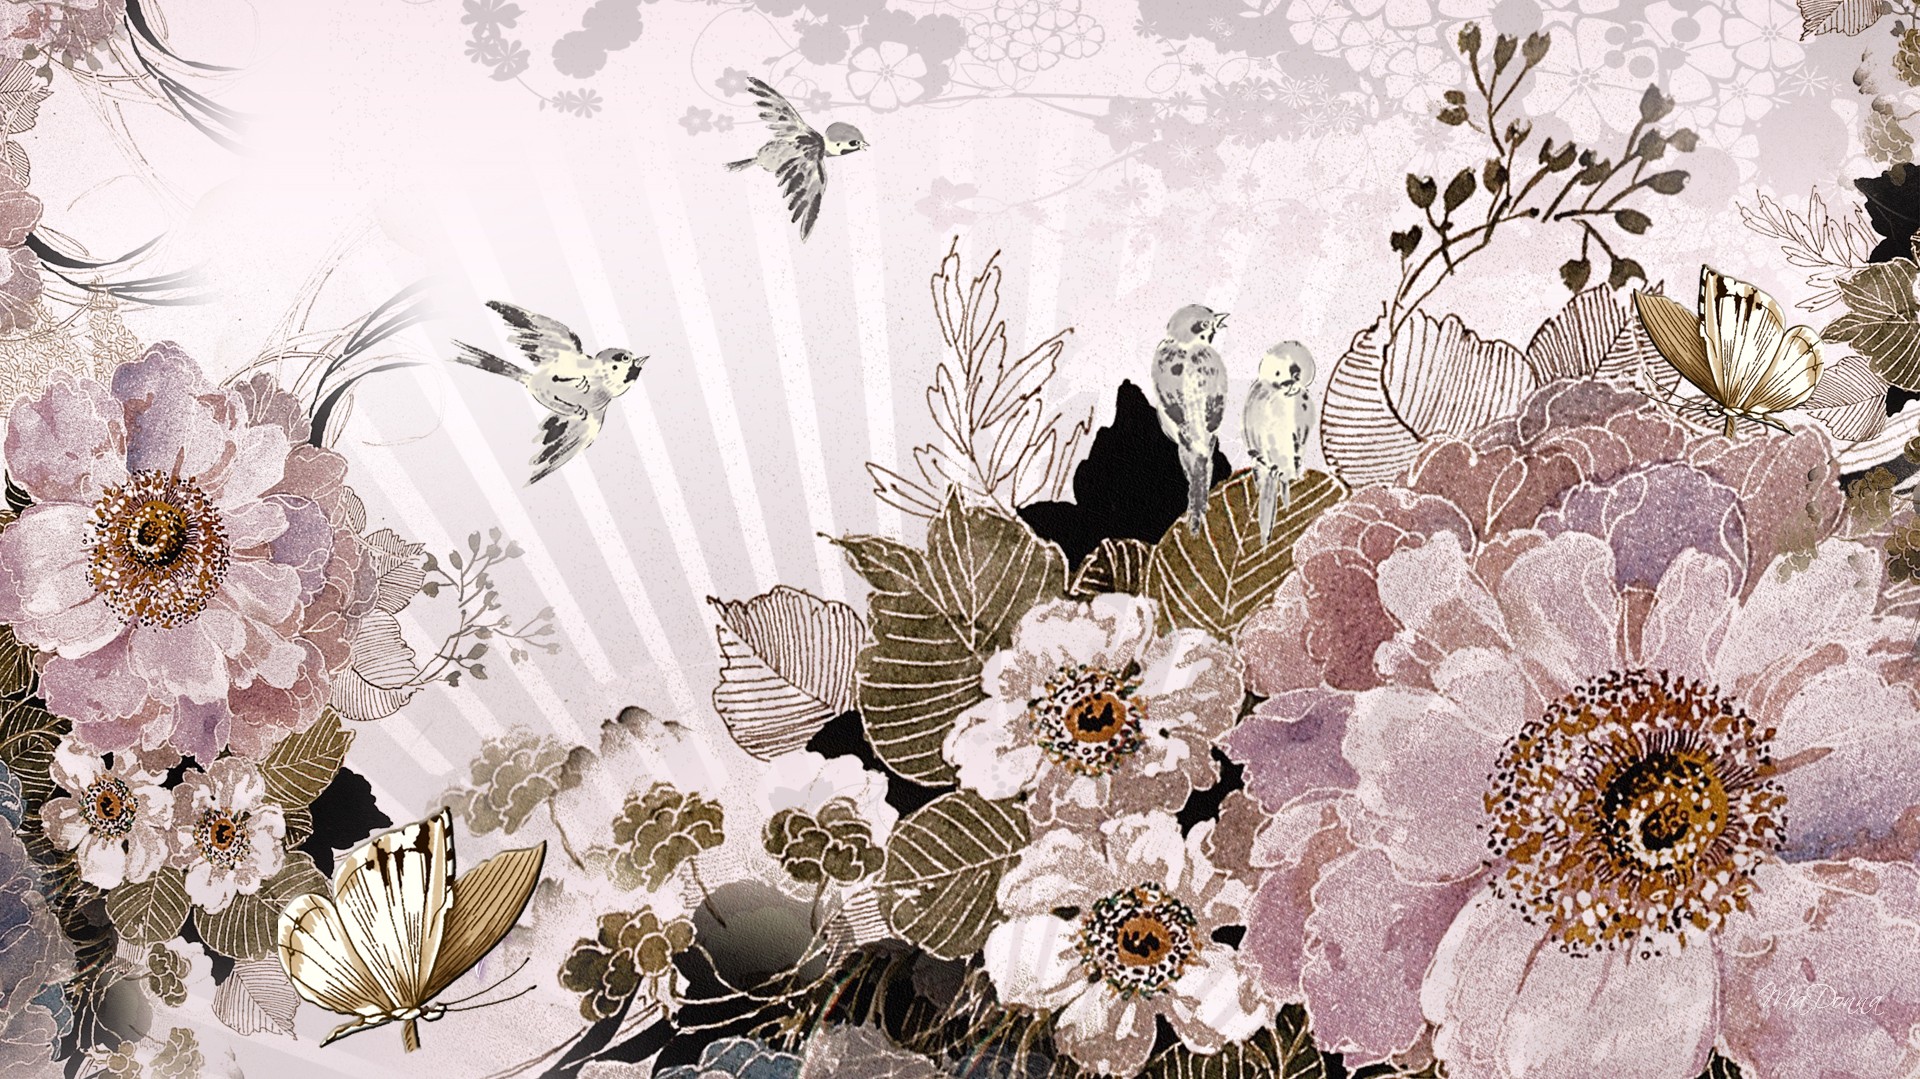 Birds Blossoms and Blooms wallpaper   ForWallpapercom